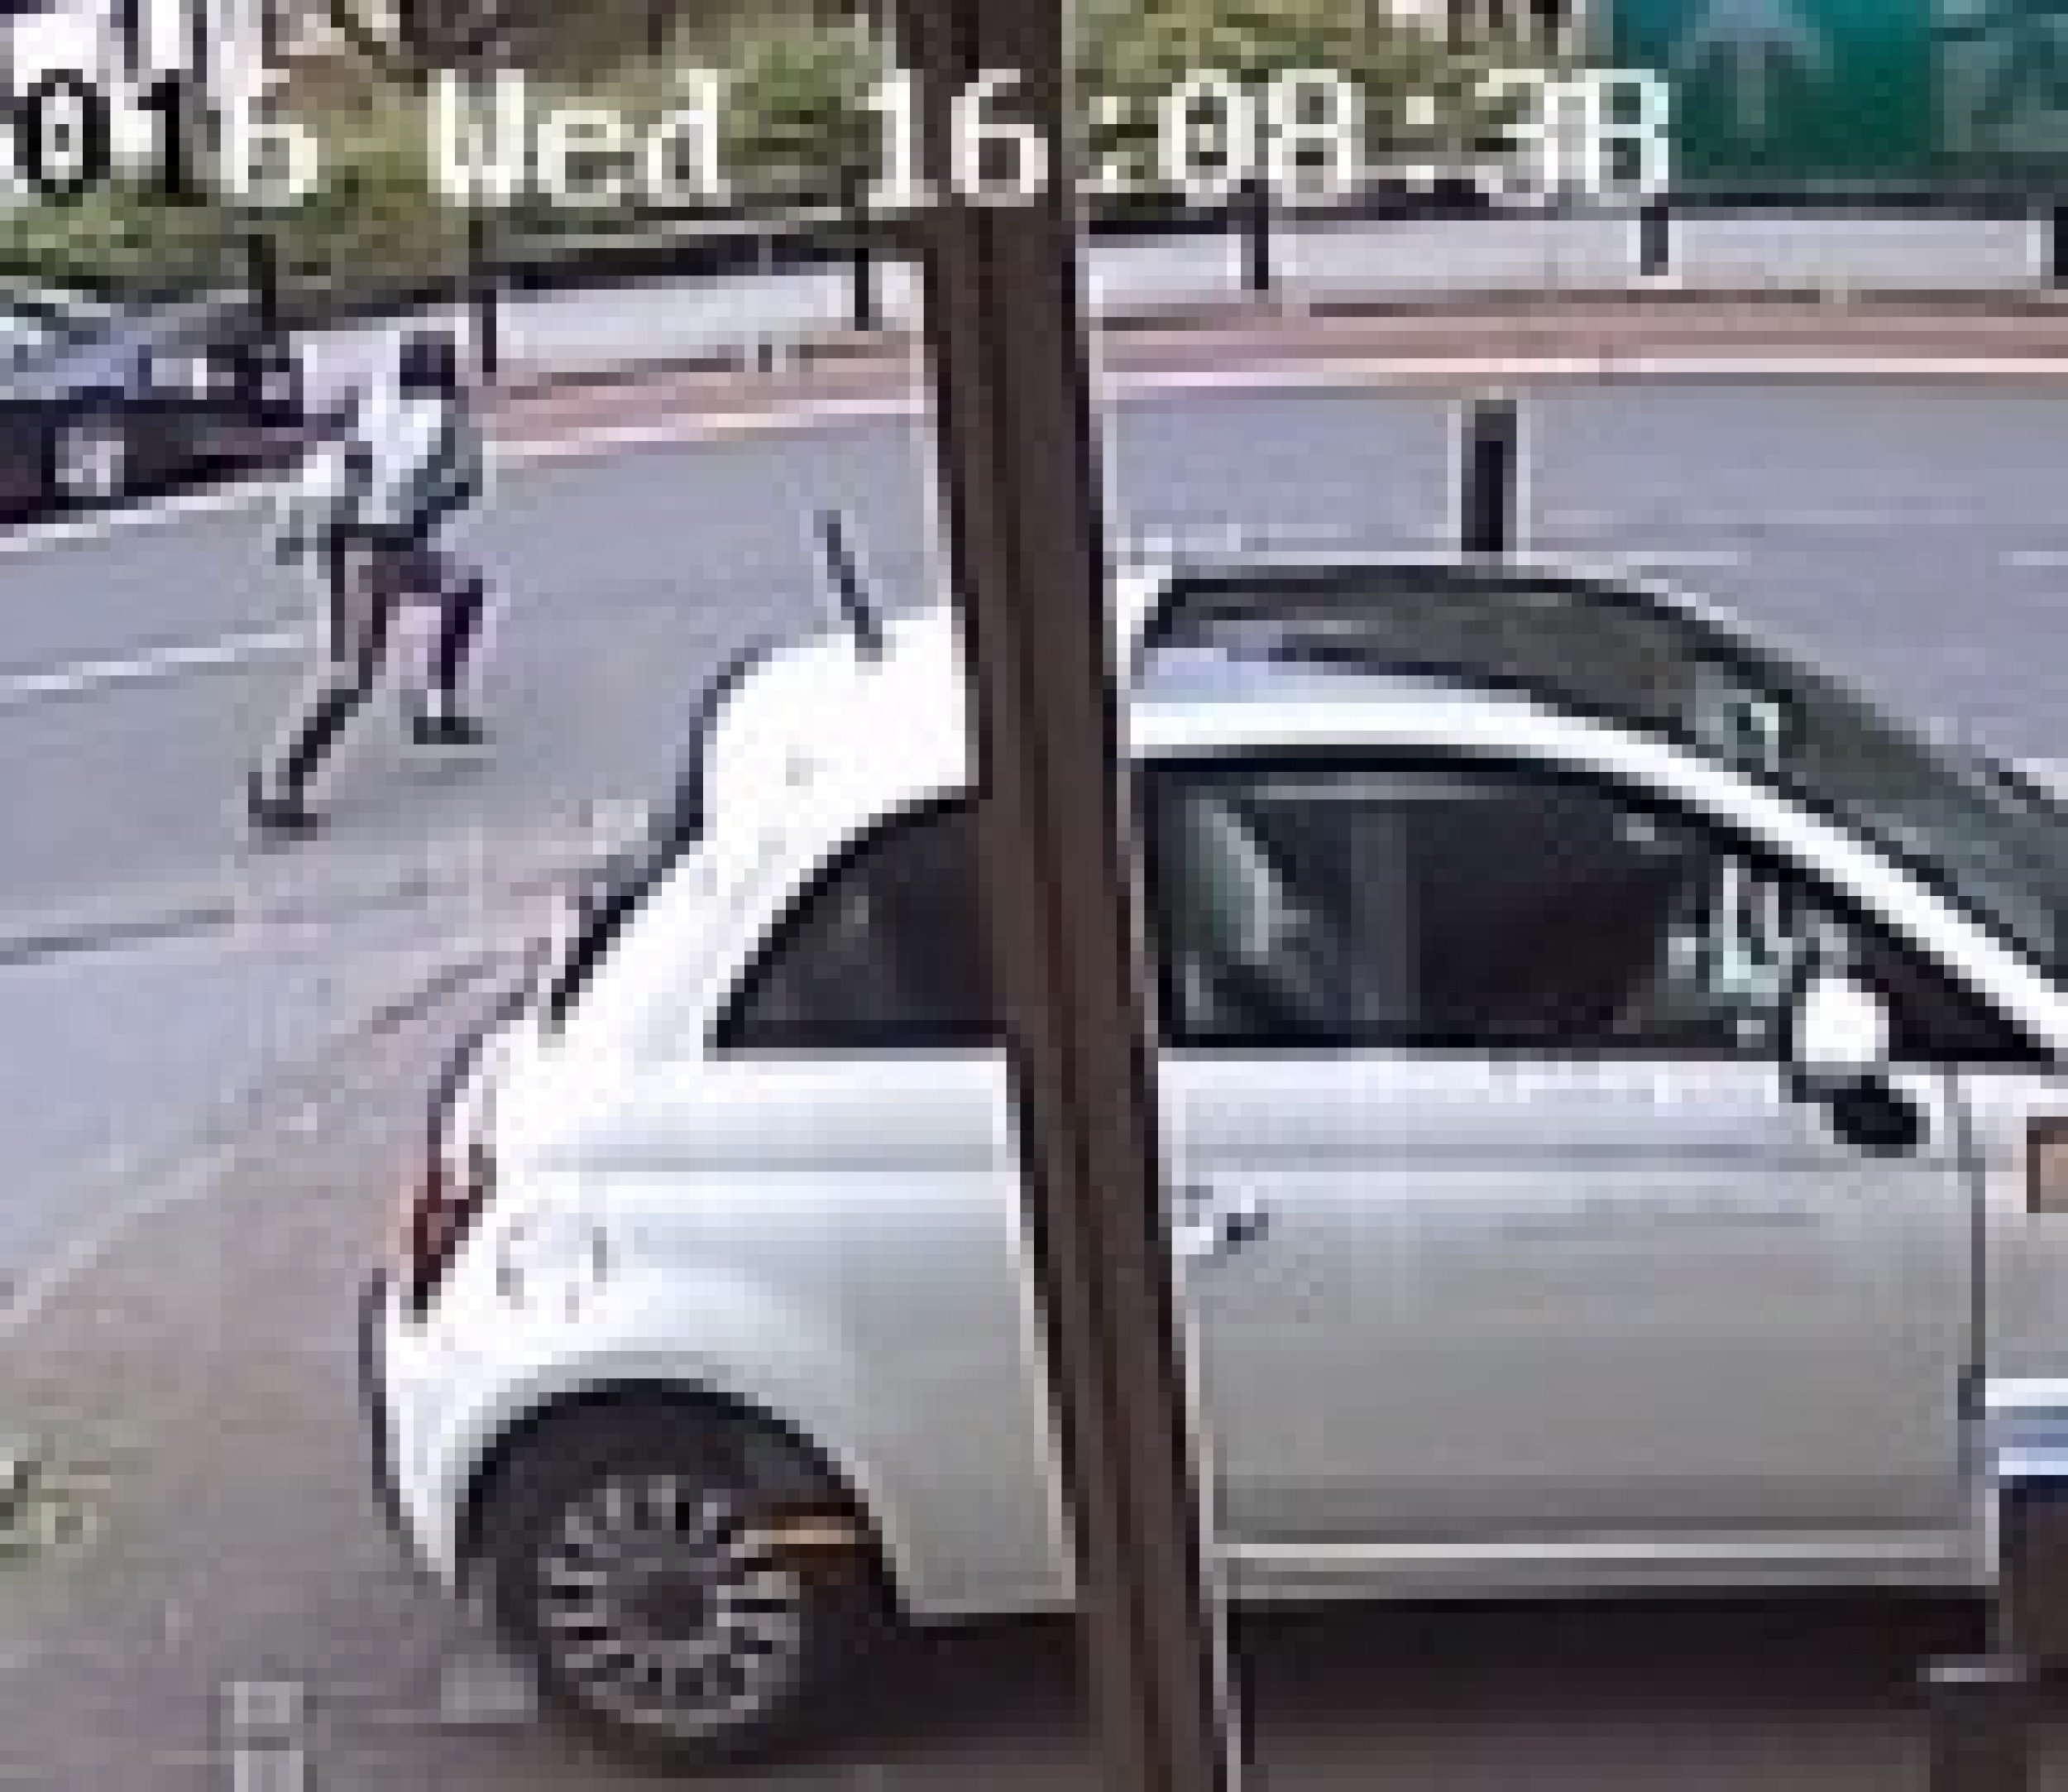 CCTV footage shows London daylight shooting